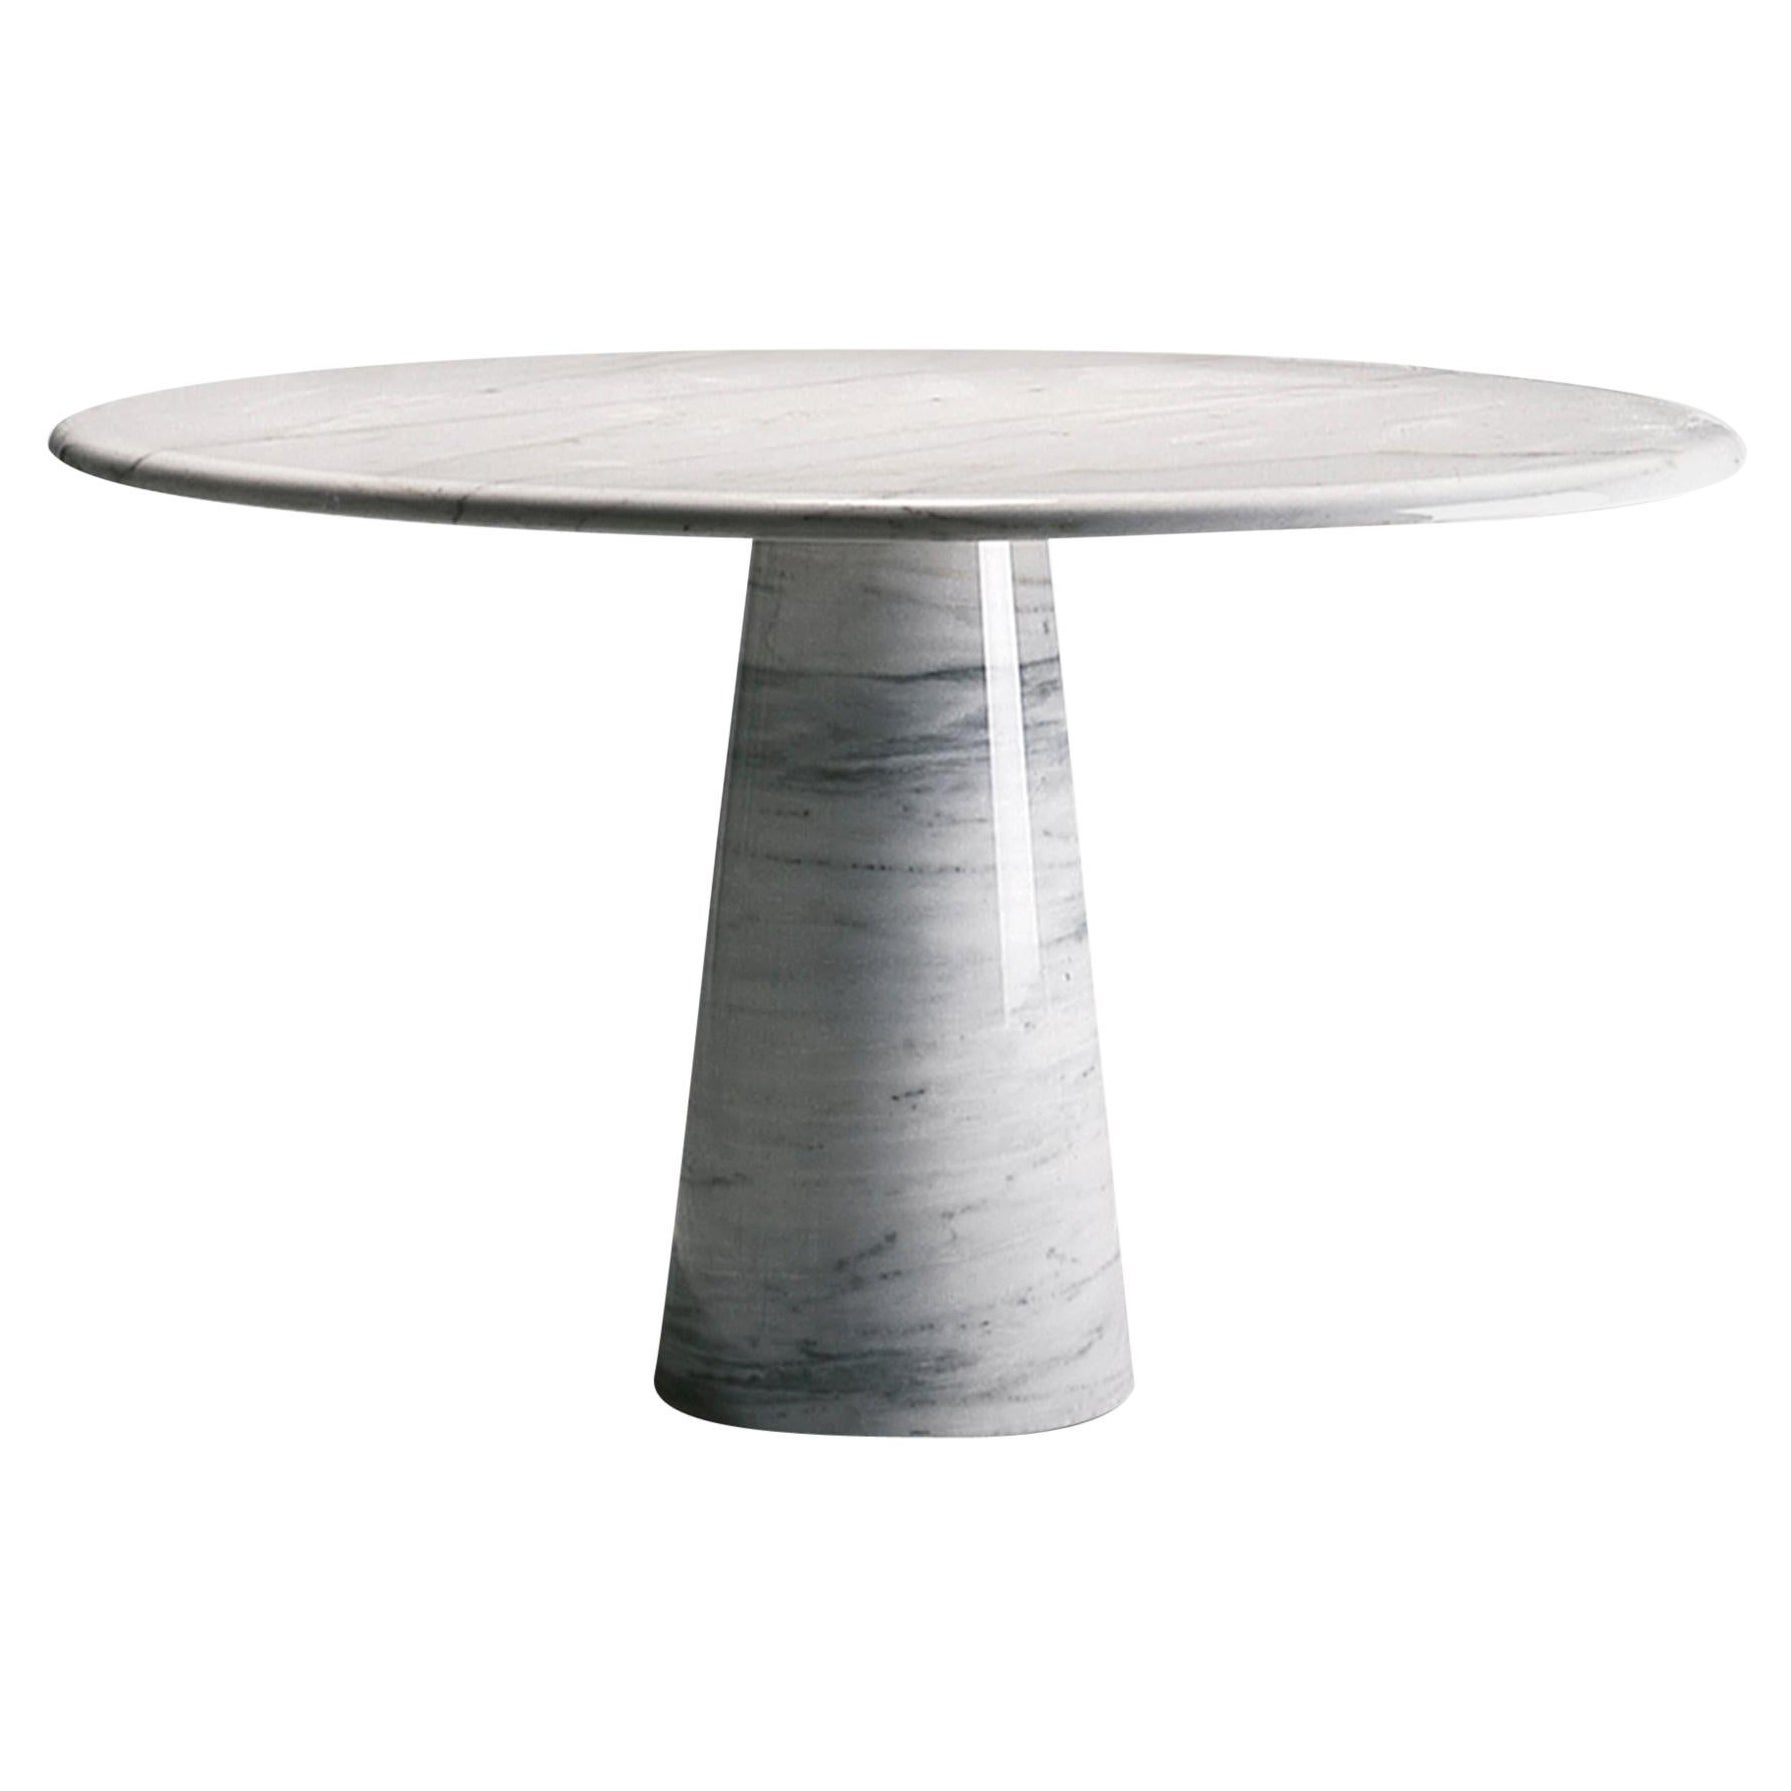 'Colonnata' Round Dining Table D160 by Giusti & Di Rosa, White Carrara Marble